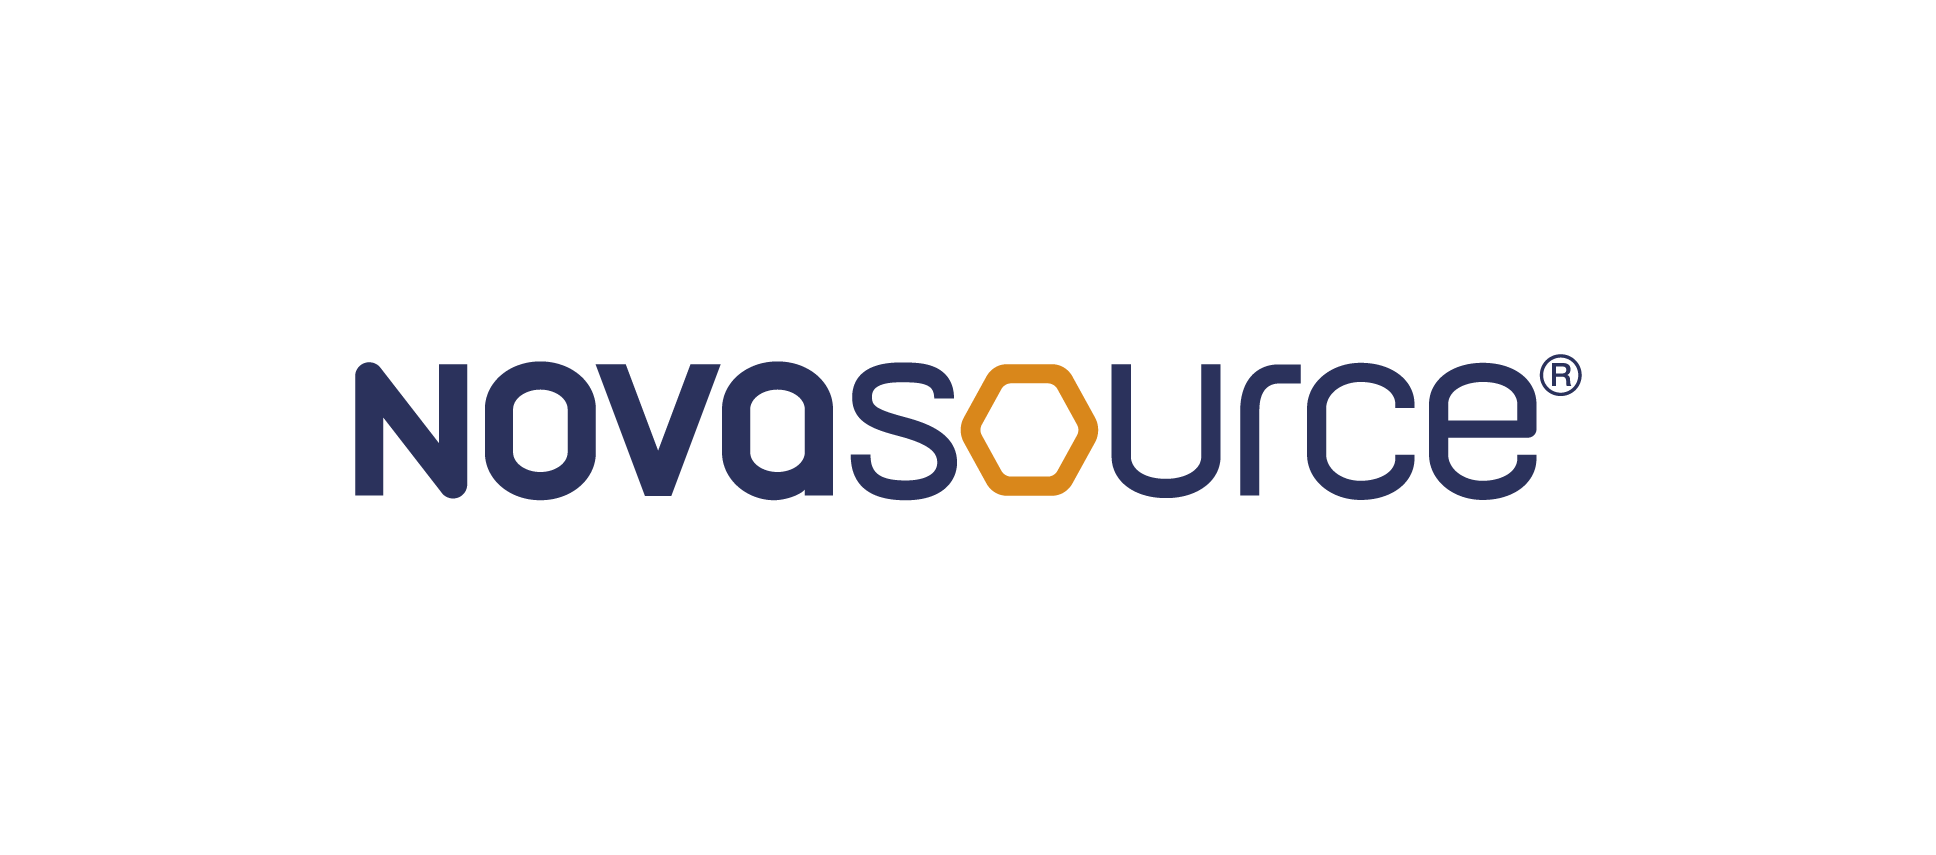 Novosource logo